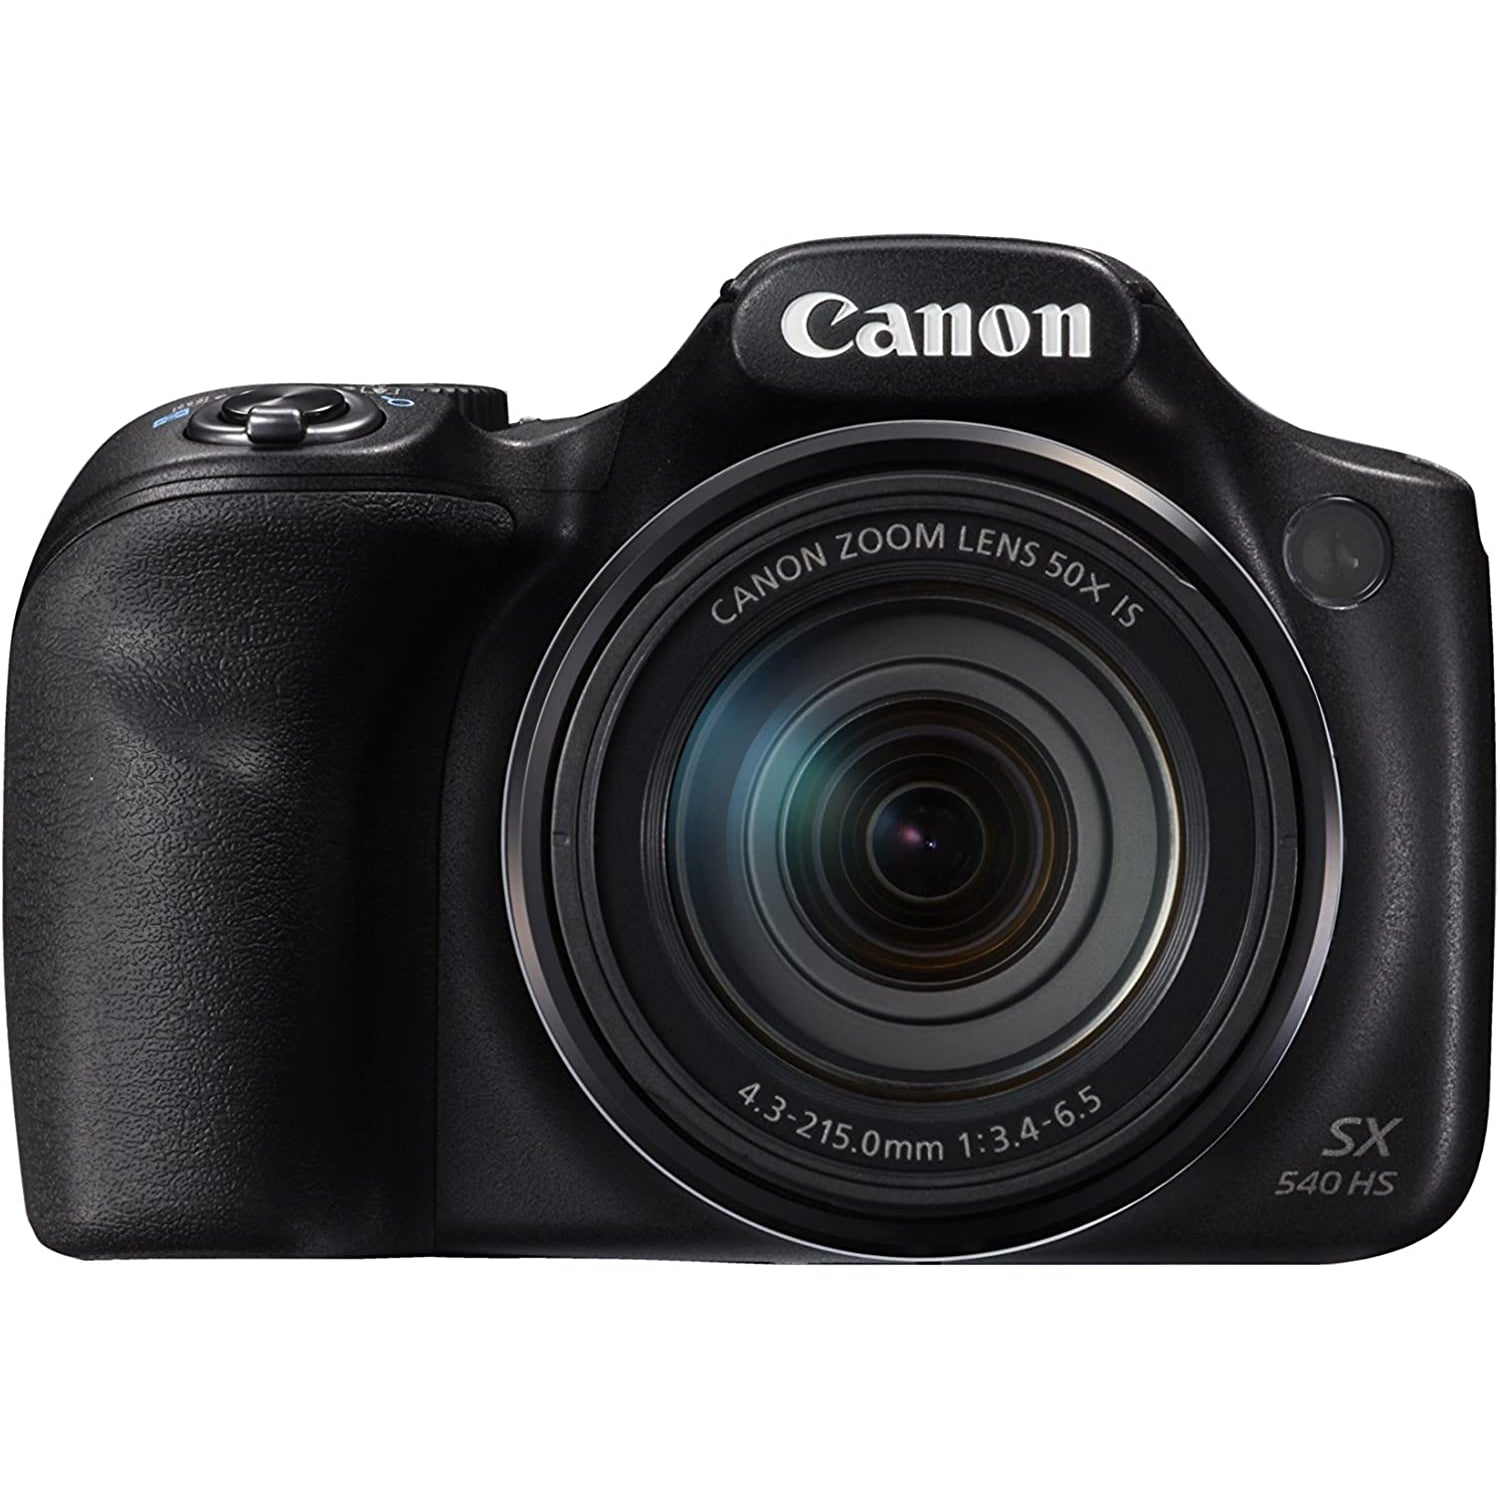 Canon PowerShot SX540 HS Bridge Camera, HD 1080p, Wi-Fi, NFC, 20.3MP, 50x, Black - Refurbished Good